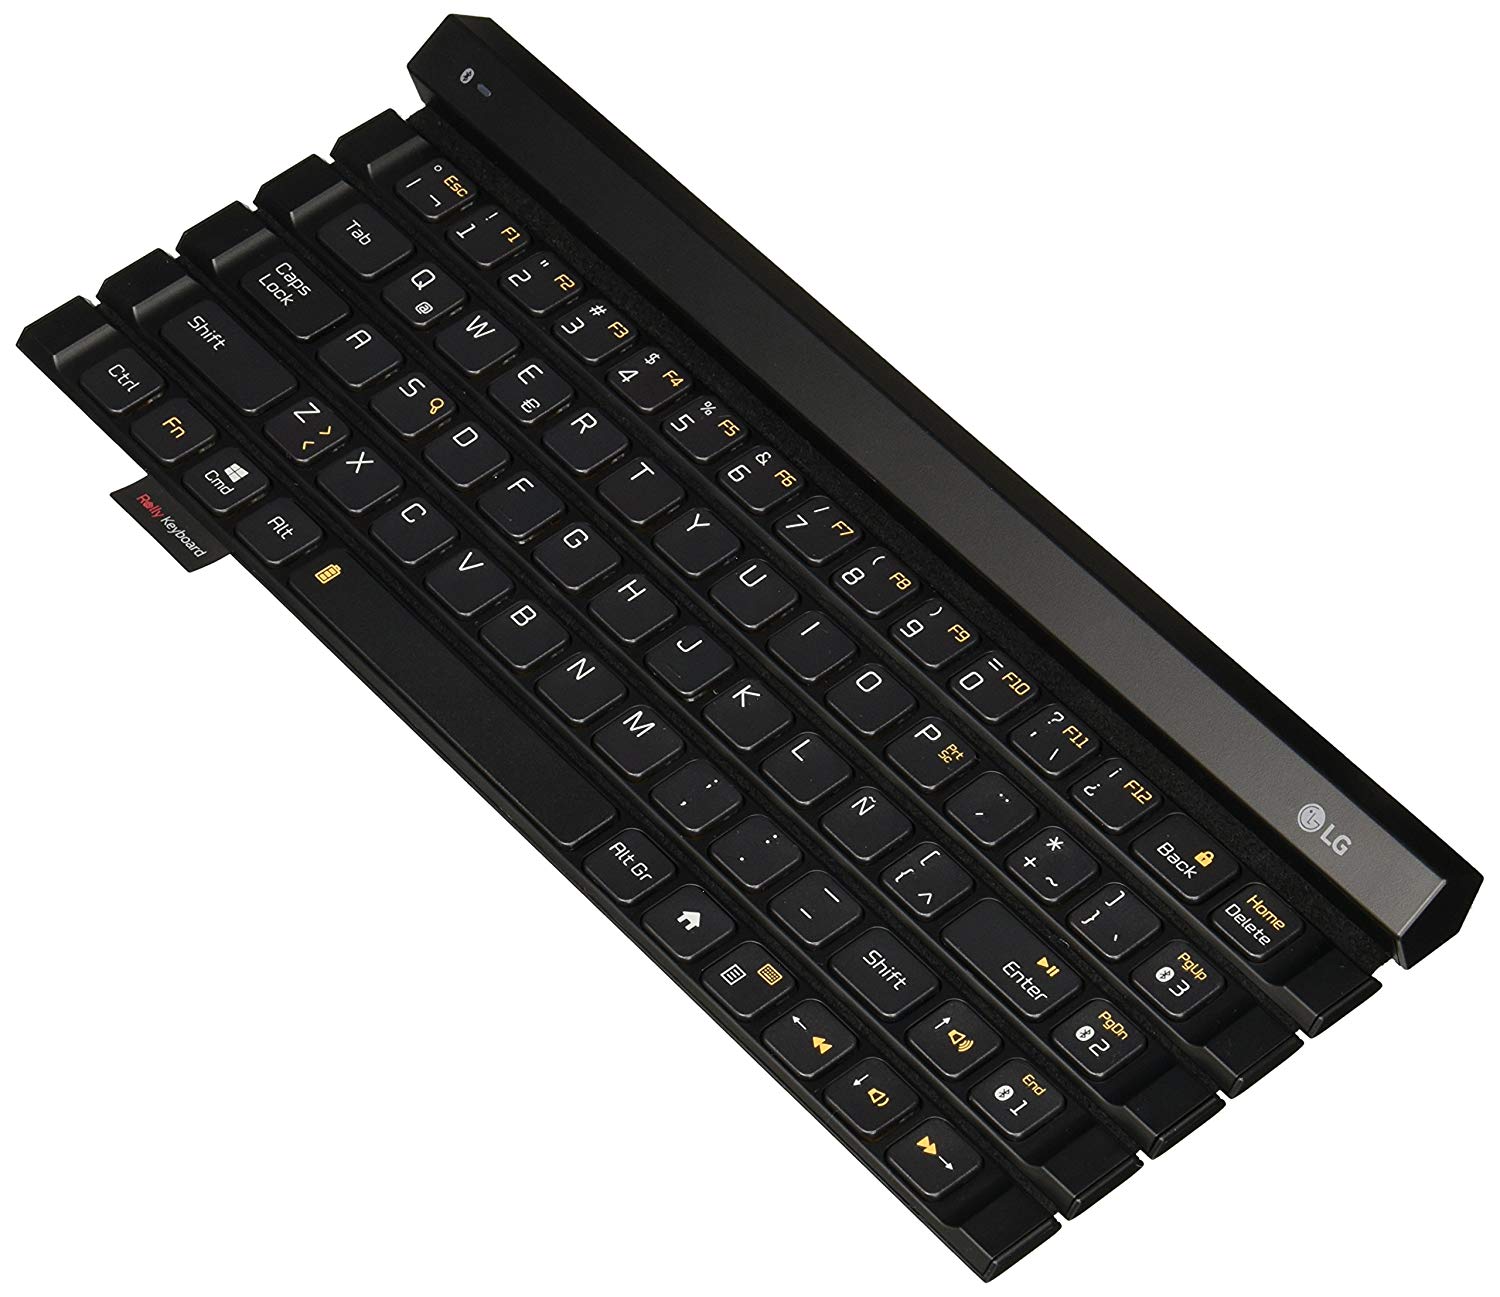 LG V40 keyboard accessory